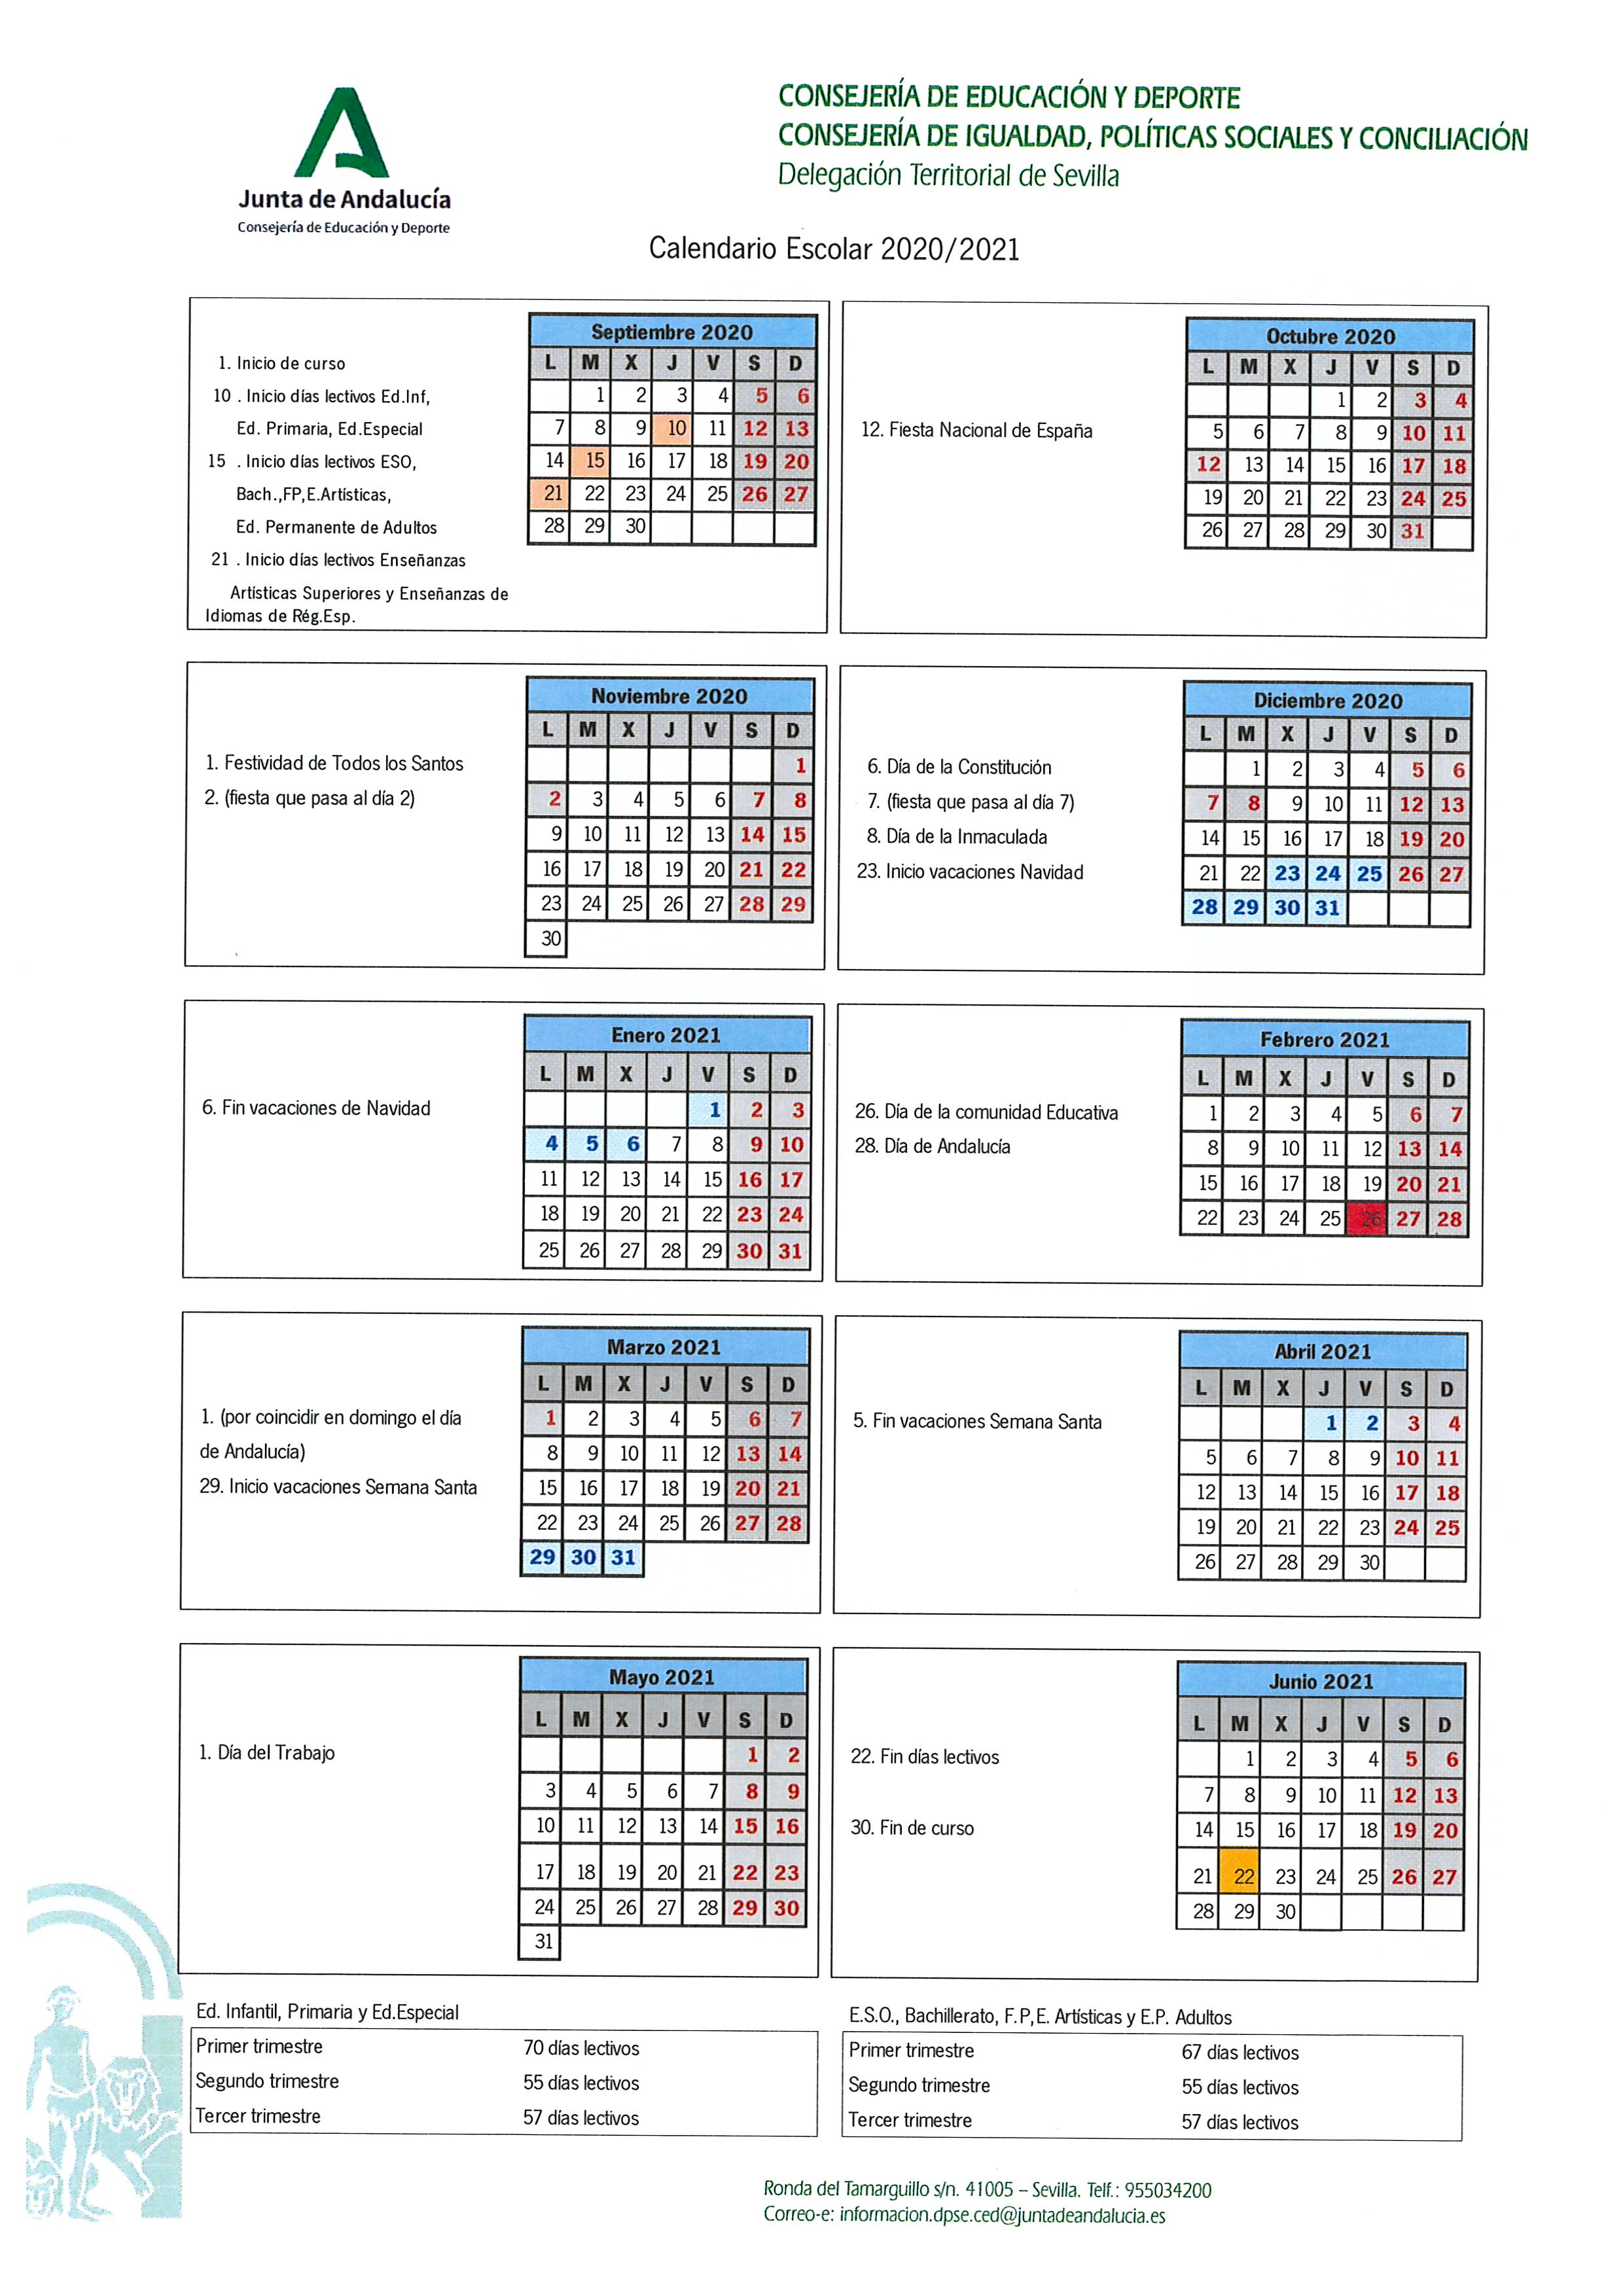 Calendario Escolar curso 2020 / 2021 de la provincia de Sevilla 